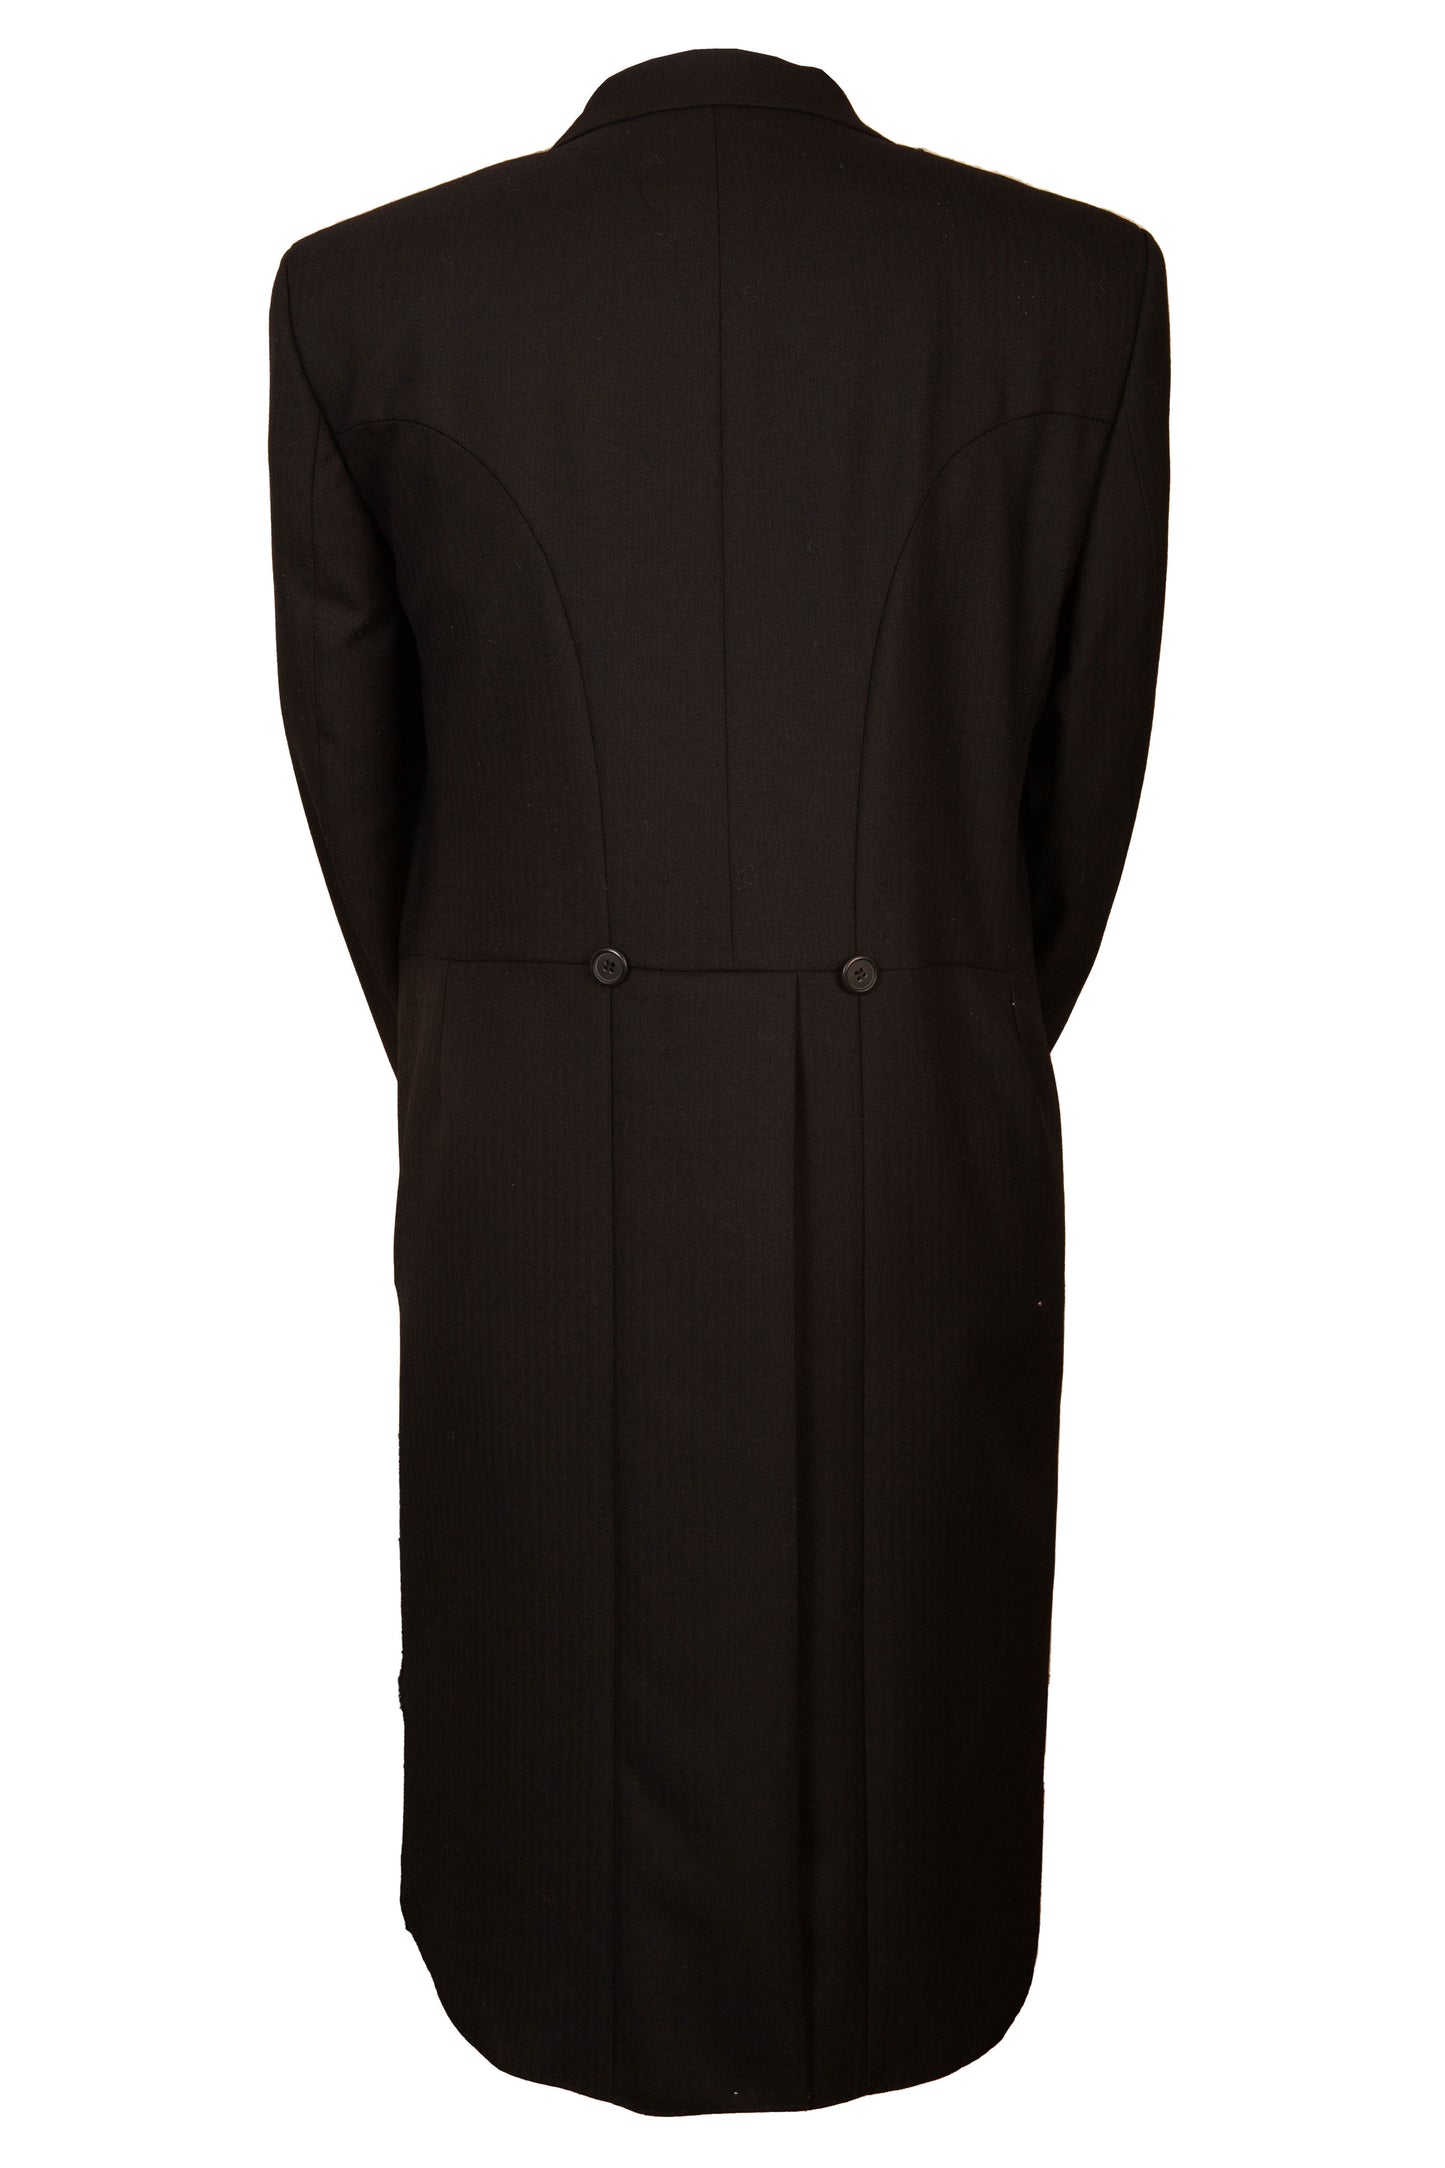 Black Herringbone Tailcoat Royal Ascot Wedding Jacket Wool - Brand New